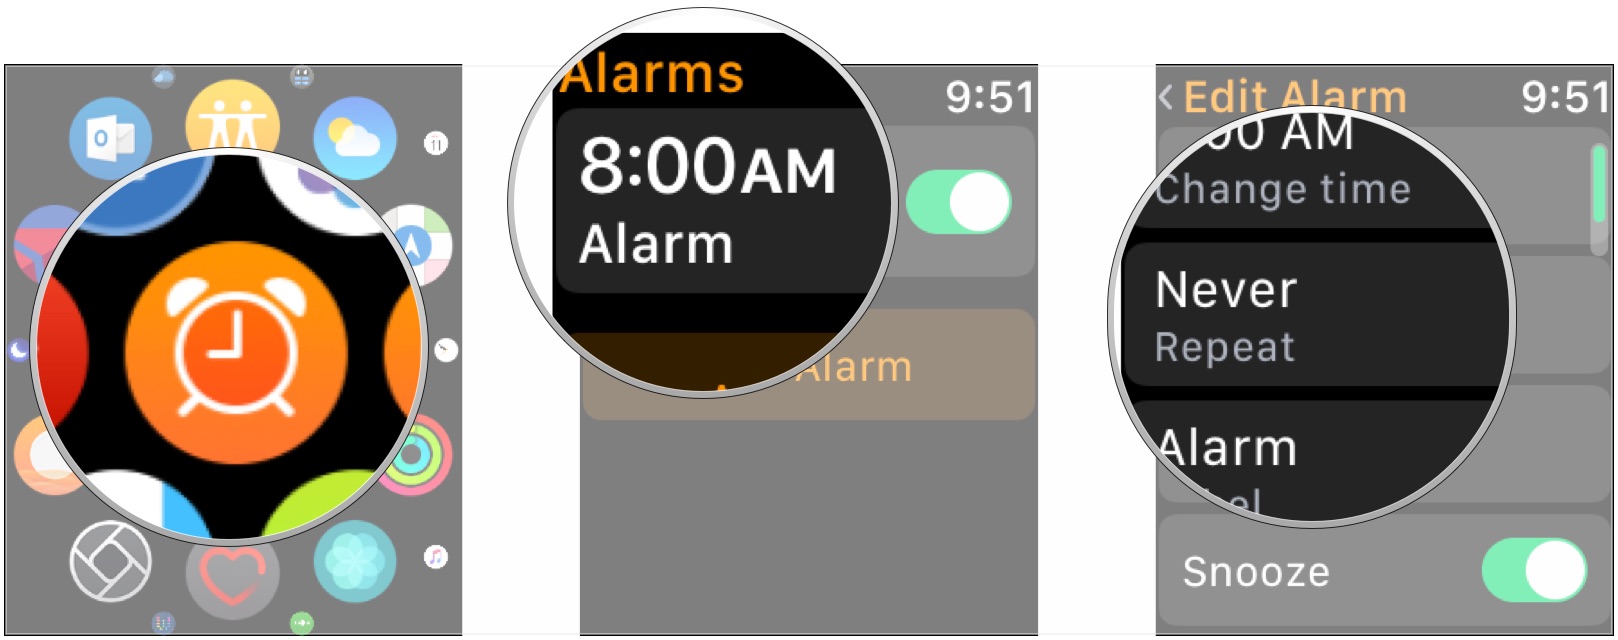 Будильник на apple watch. Как поставить будильник на Apple watch 3. Интерфейс будильника на айфоне.